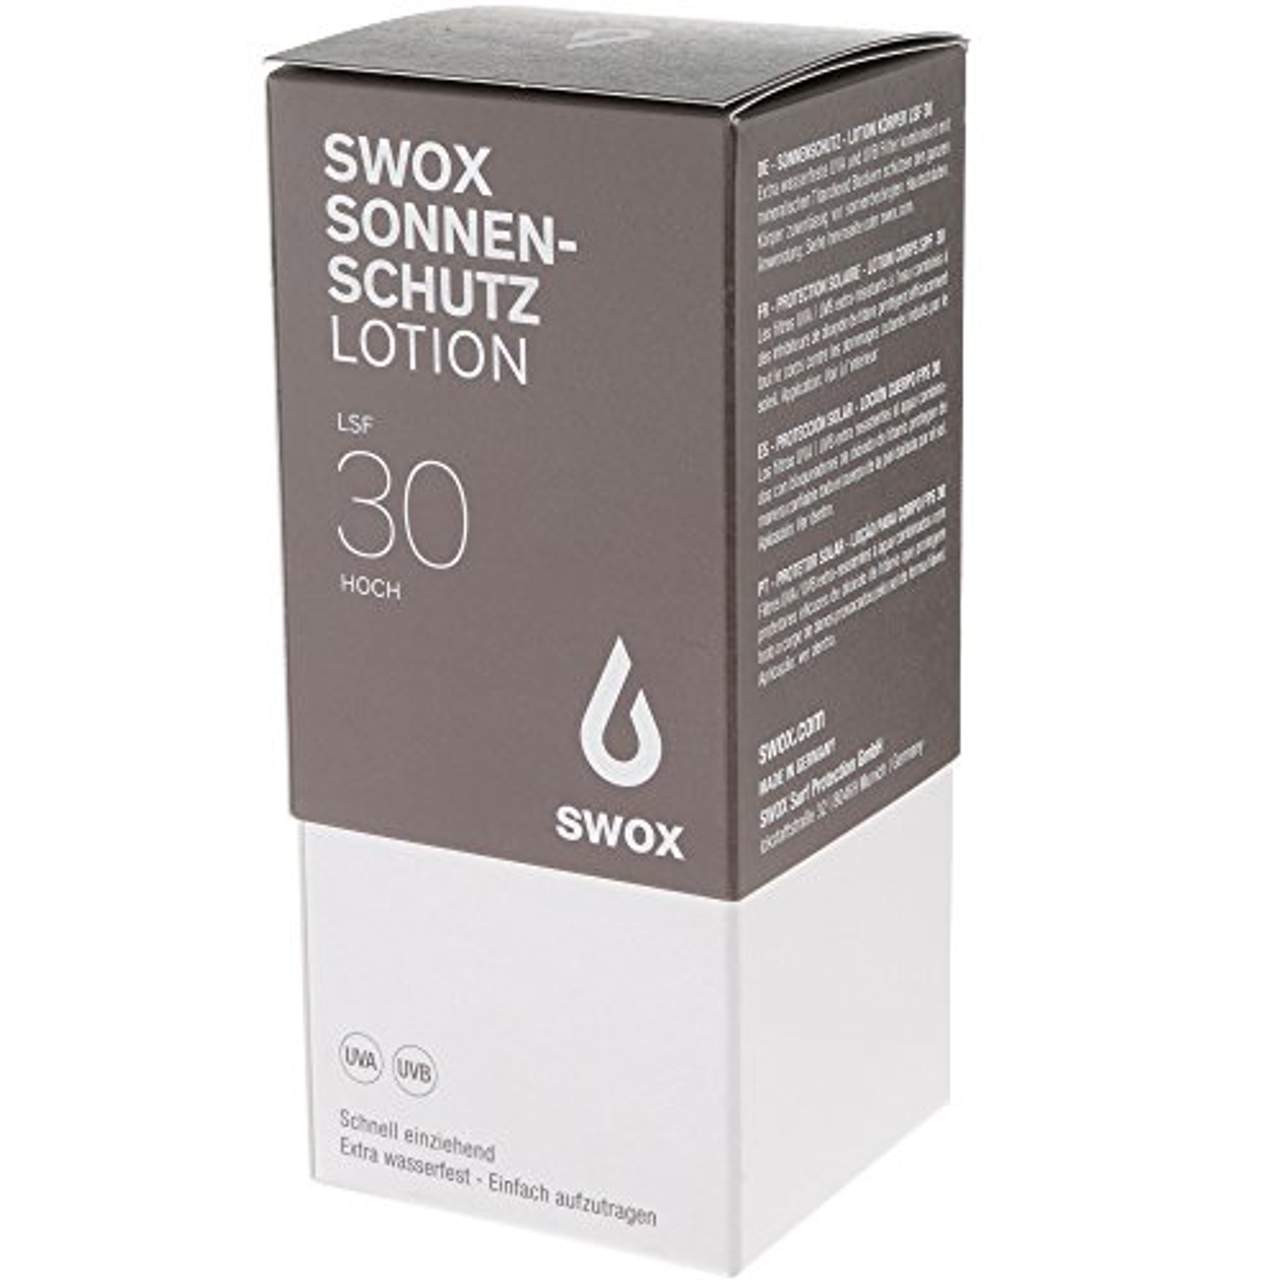 SWOX Sonnenschutz Lotion LSF 30